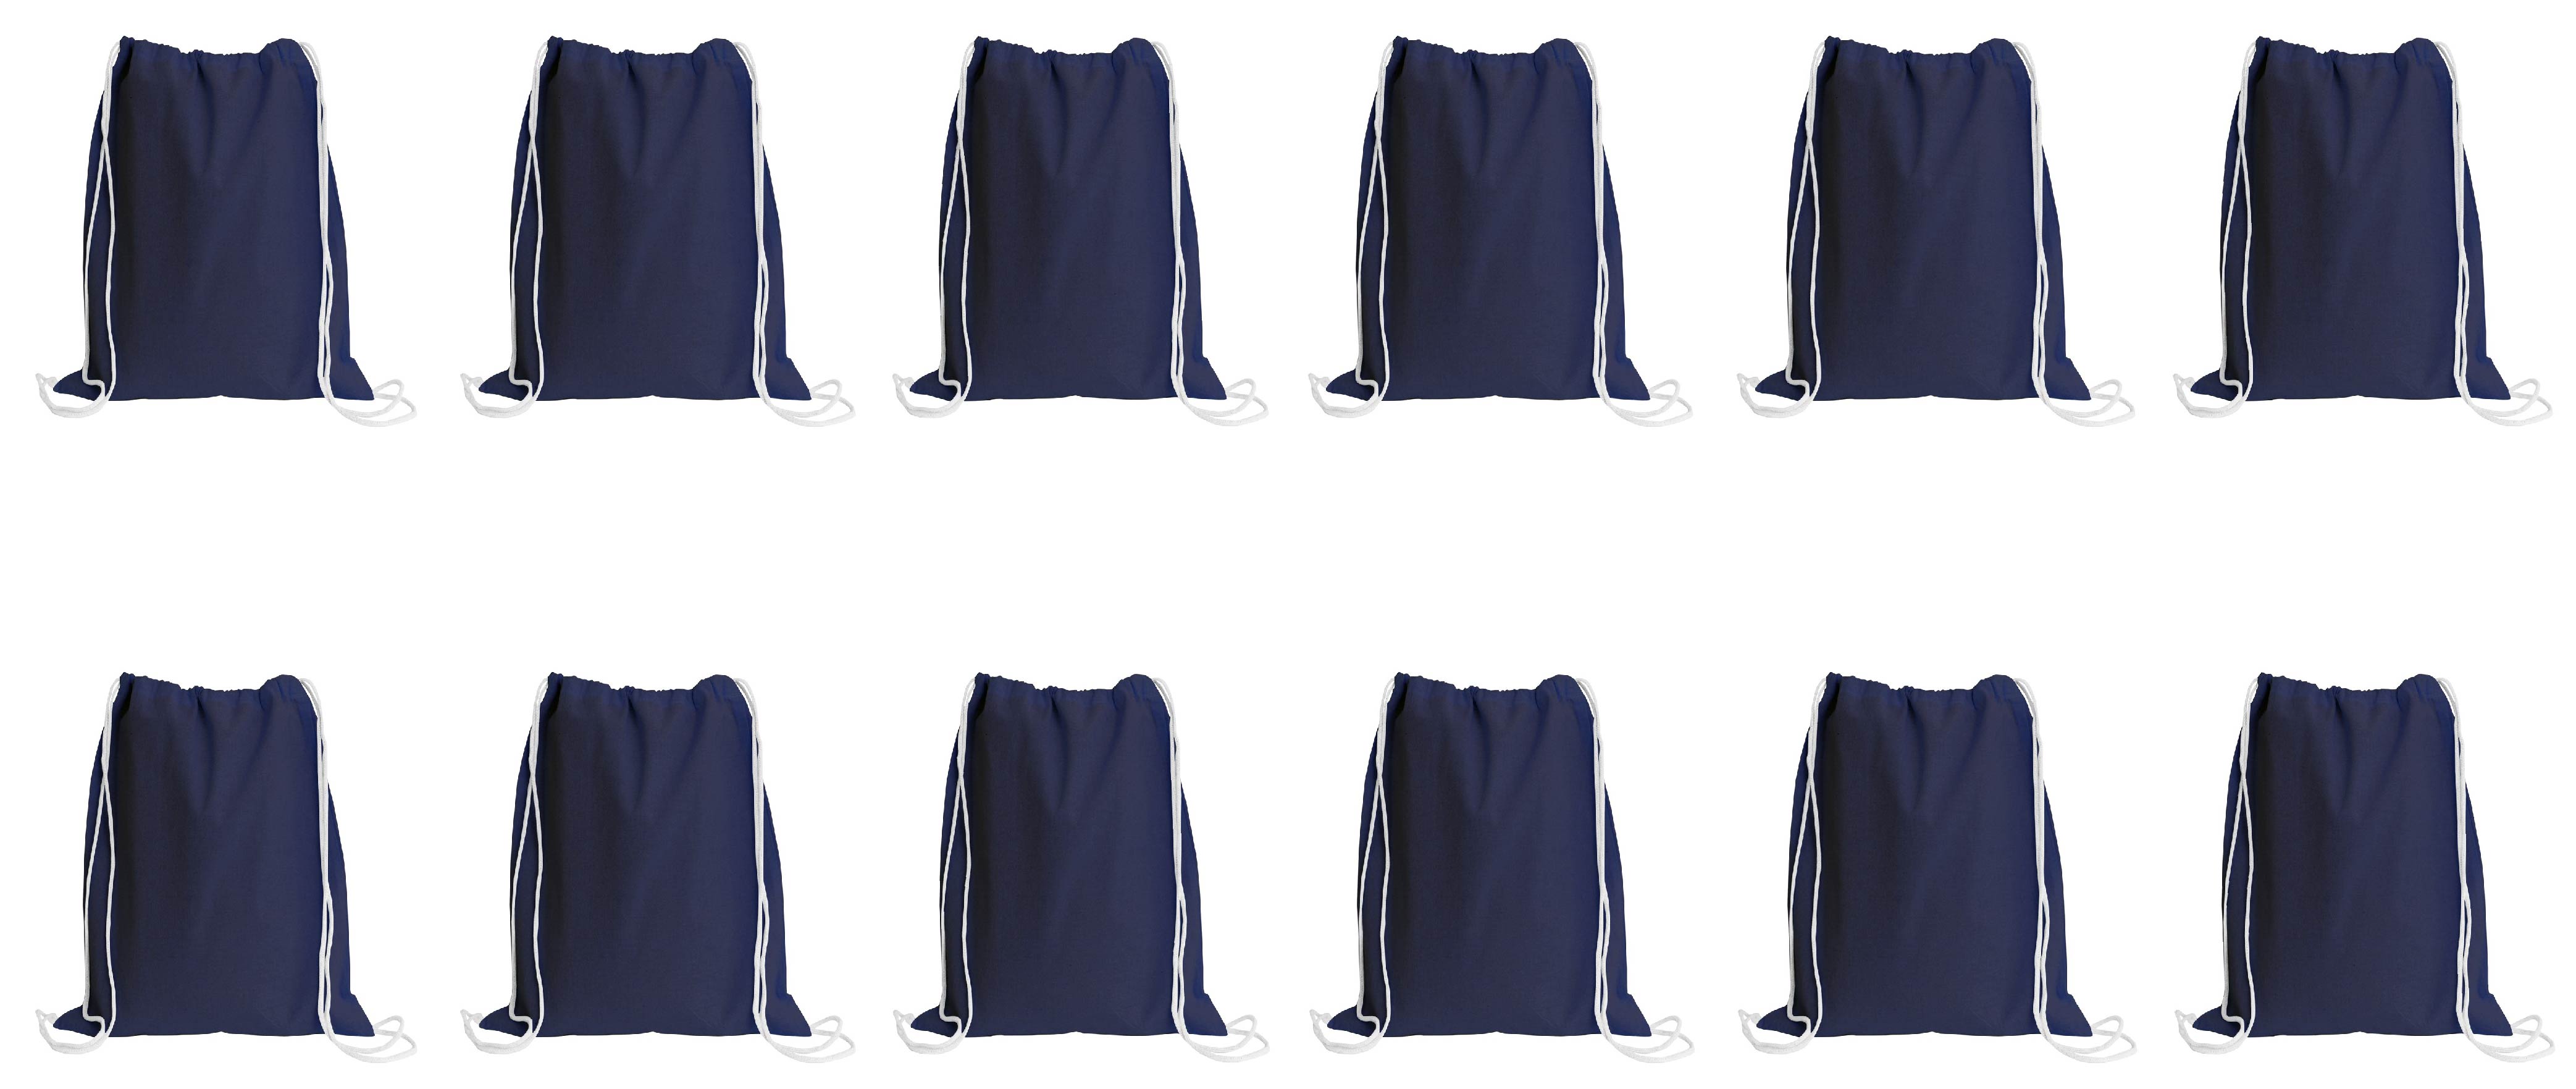 Sport Drawstring Bag, 100% Cotton, Navy Color